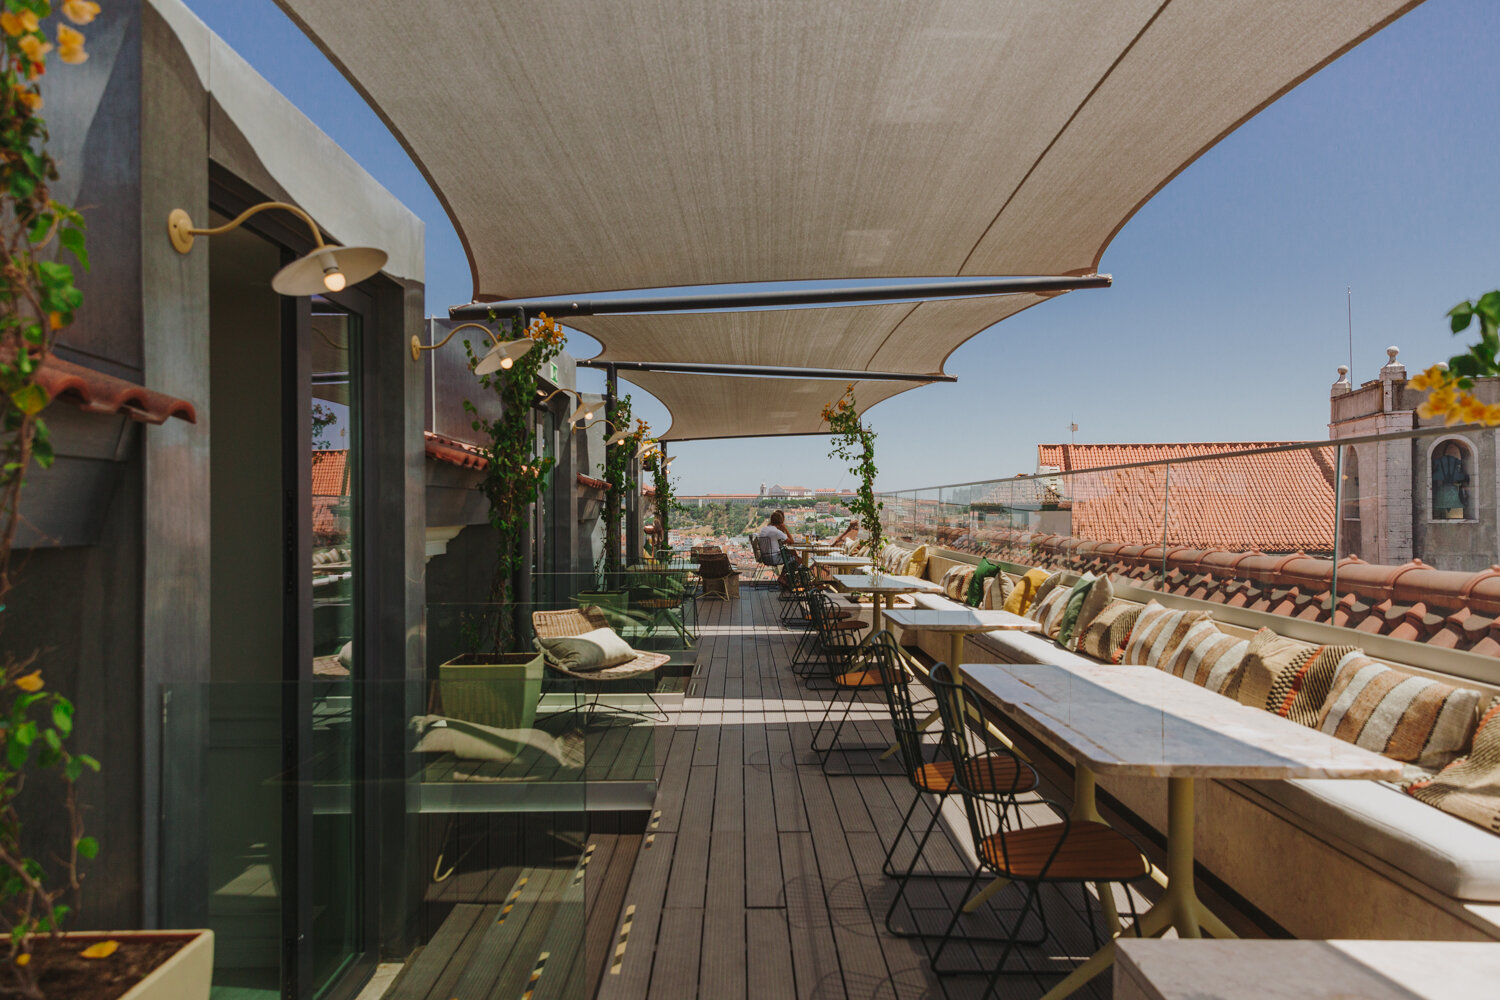 Lumi Rooftop Bar & Restaurant